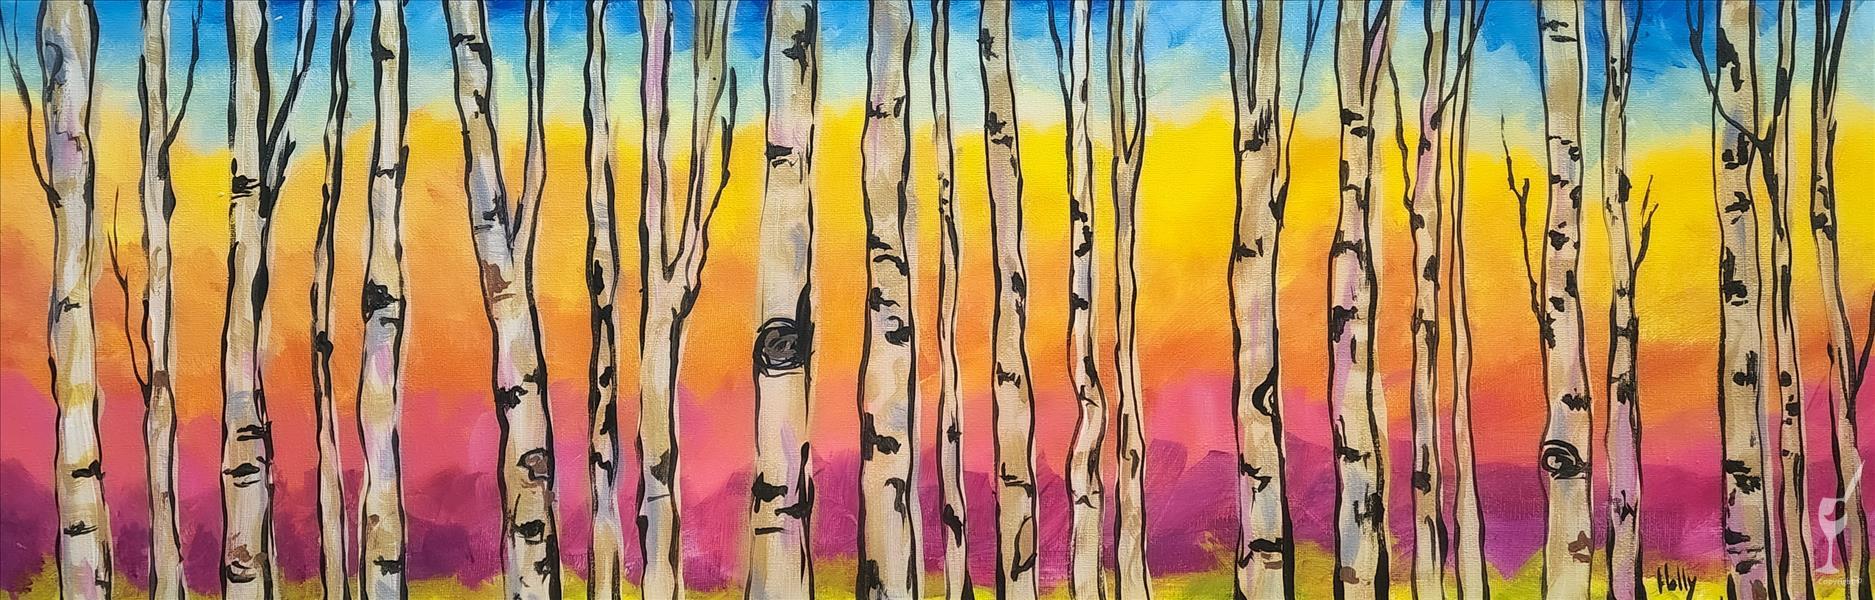 PUBLIC:  Vibrant Birch Forest (18+)